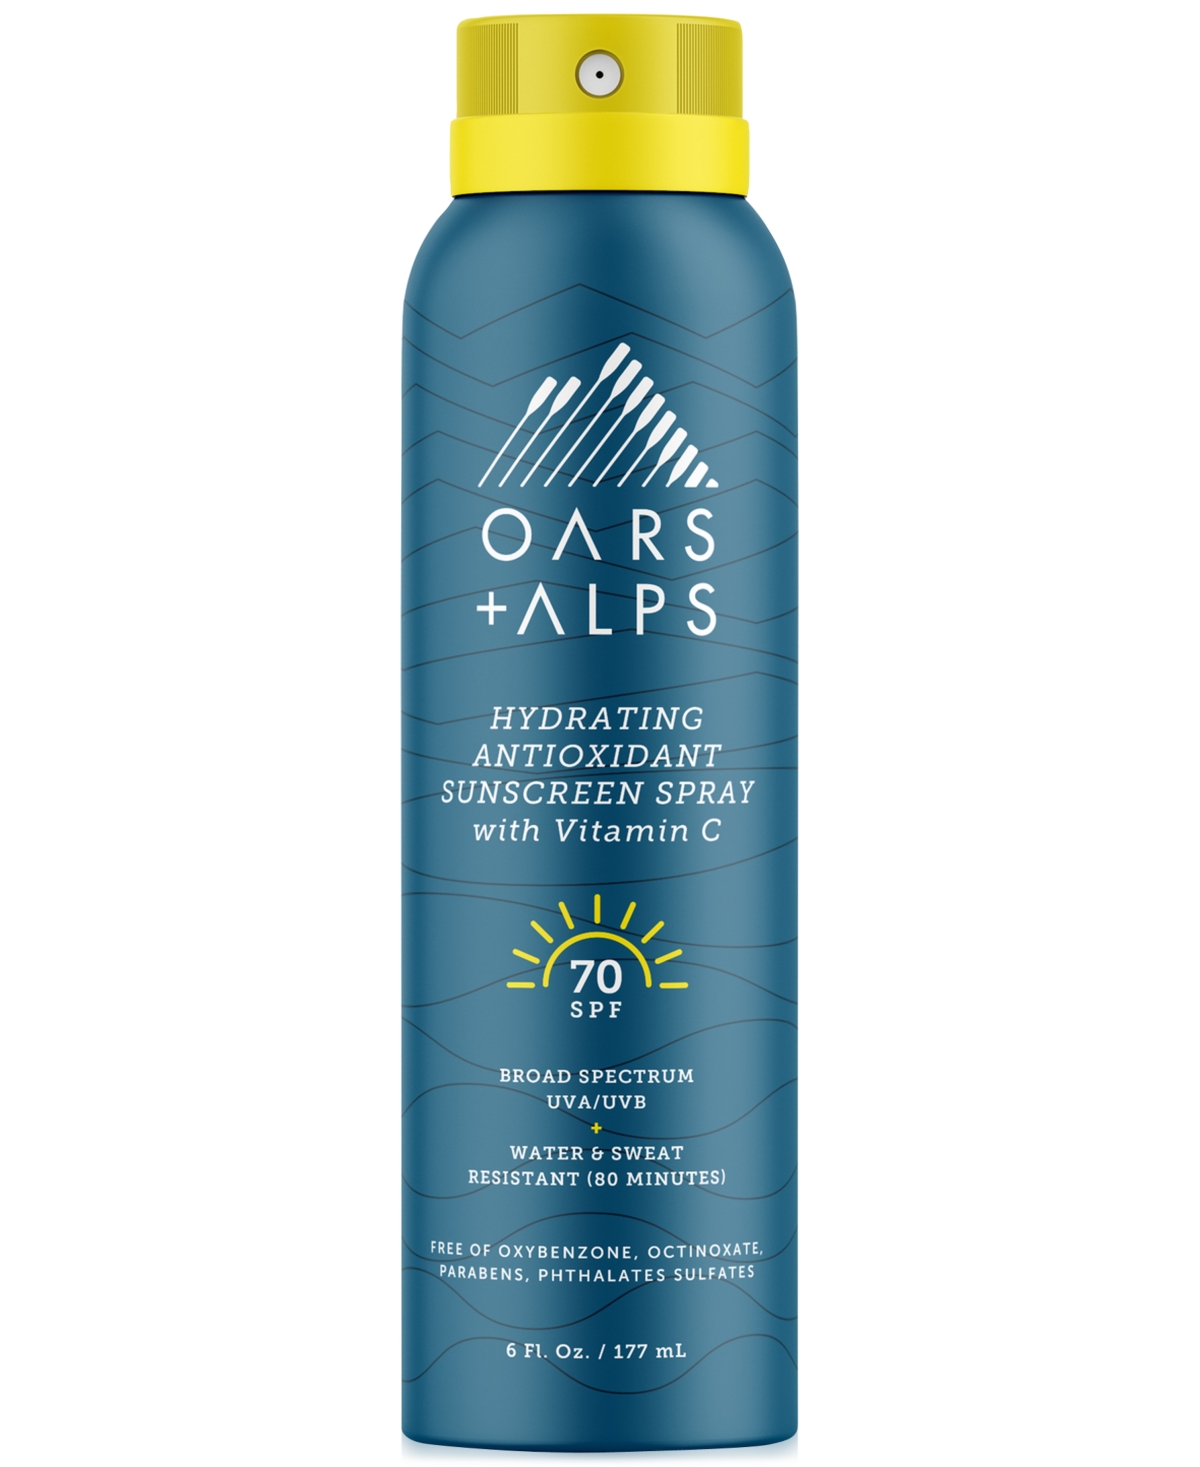 Oars + Alps Hydrating Antioxidant Sunscreen Spray Spf 70, 6 Oz.